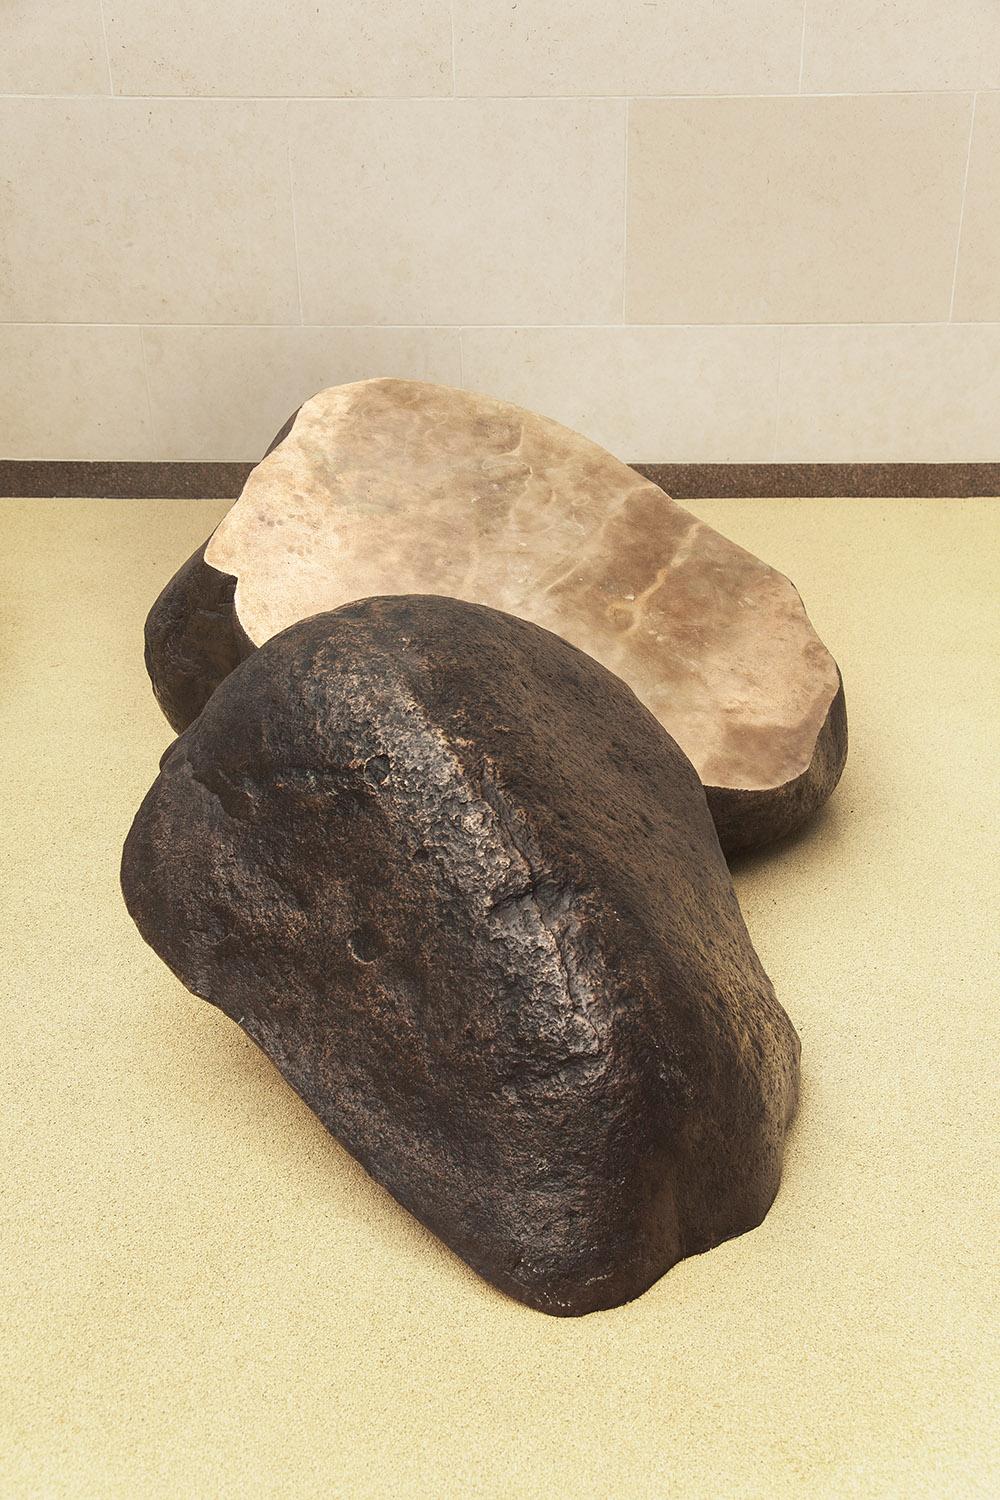 Boulder #2 - The Slide by Tom Price - Rock-like bronze sculpture, smooth